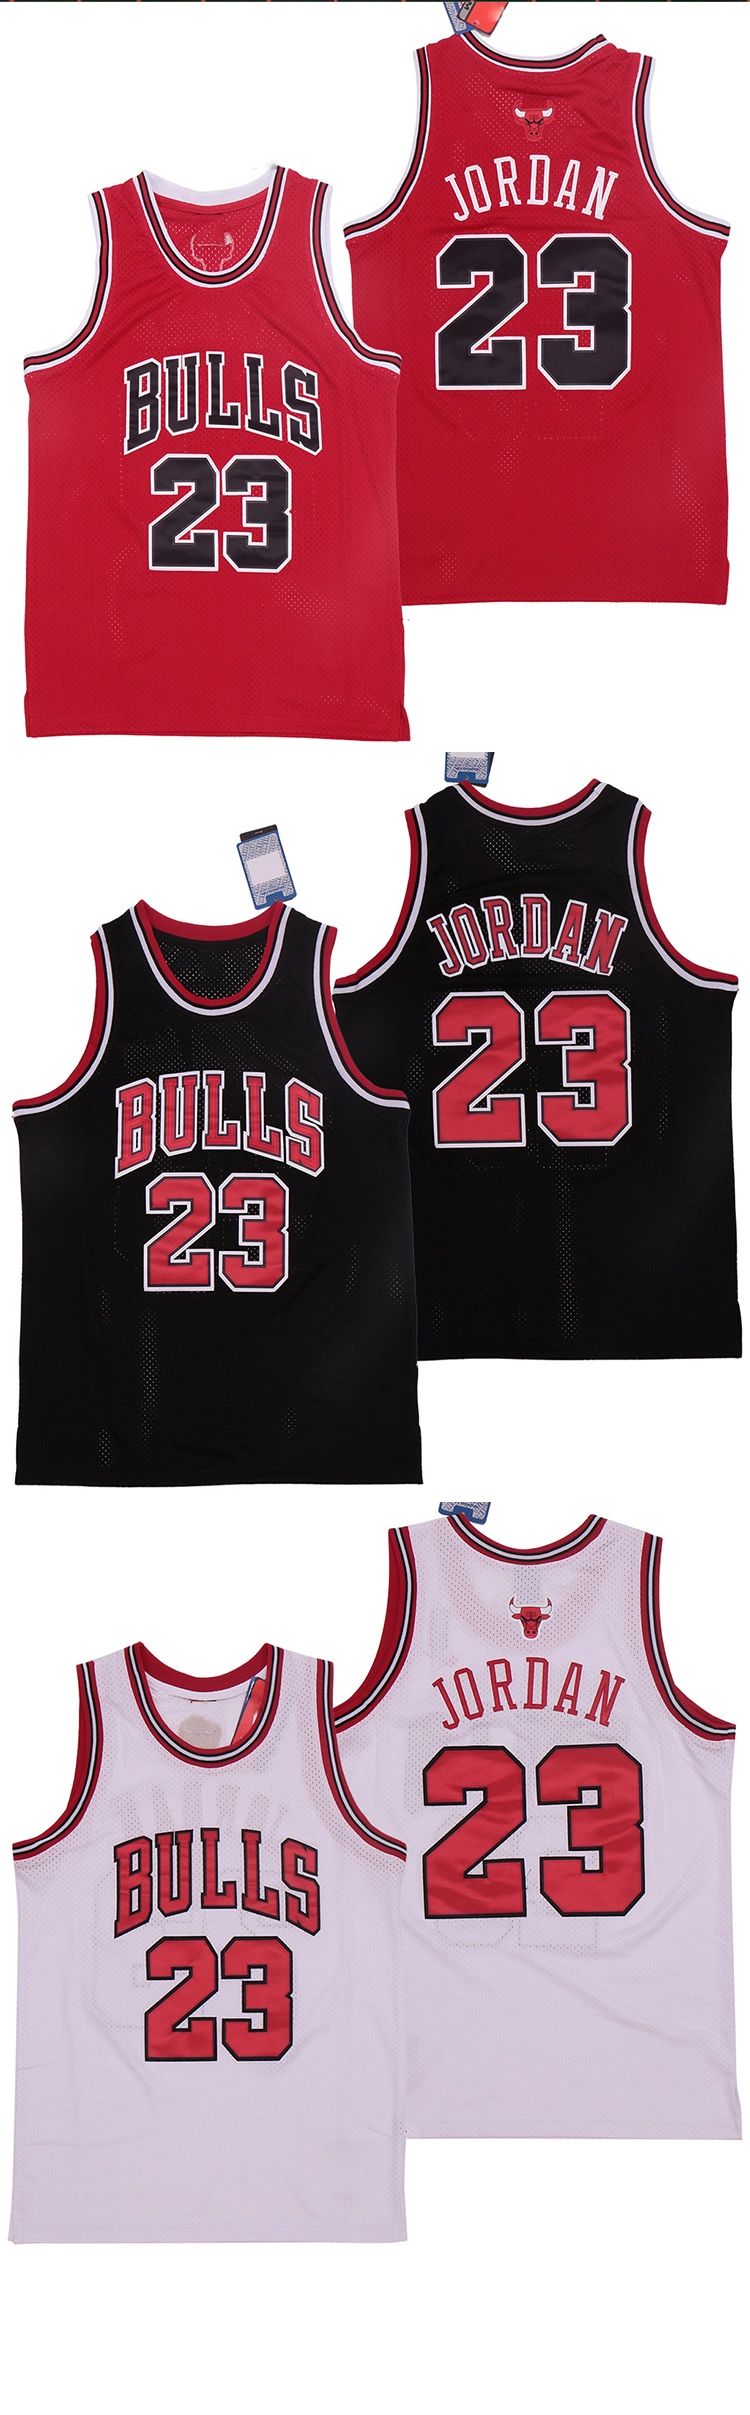 Men's Chicago Bulls #23 Embroidery Basketball Jerseys Custom Basketball Jersey Pattern Design Wholesale Custom Basketball Jerseys Uniforms